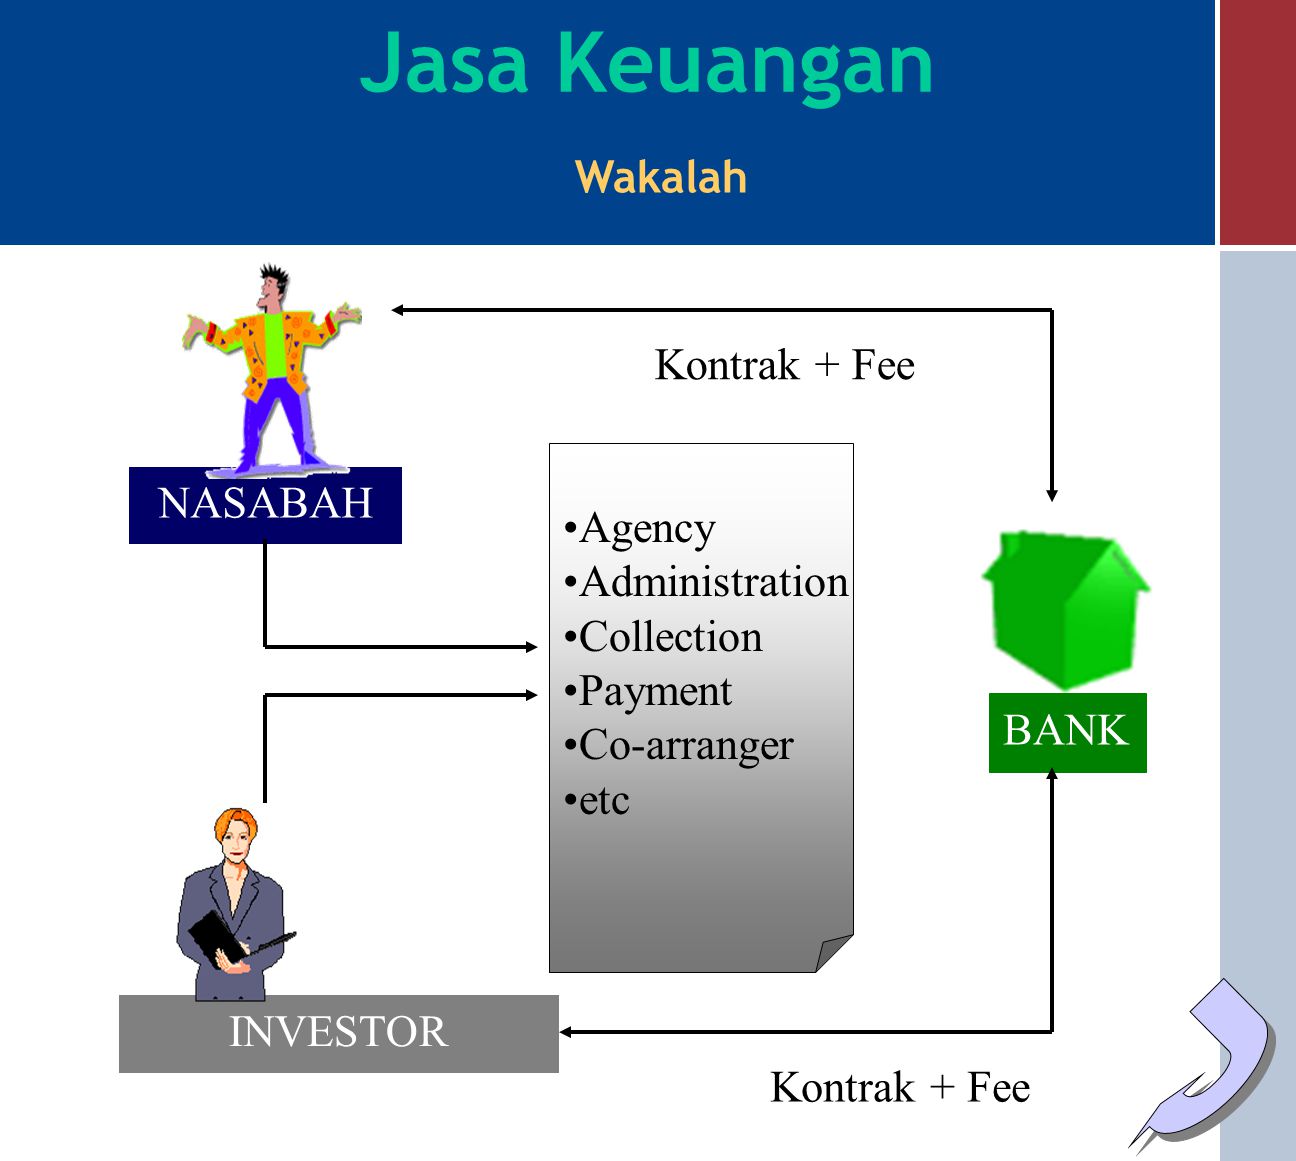 Jasa Keuangan Wakalah Kontrak + Fee NASABAH Agency Administration